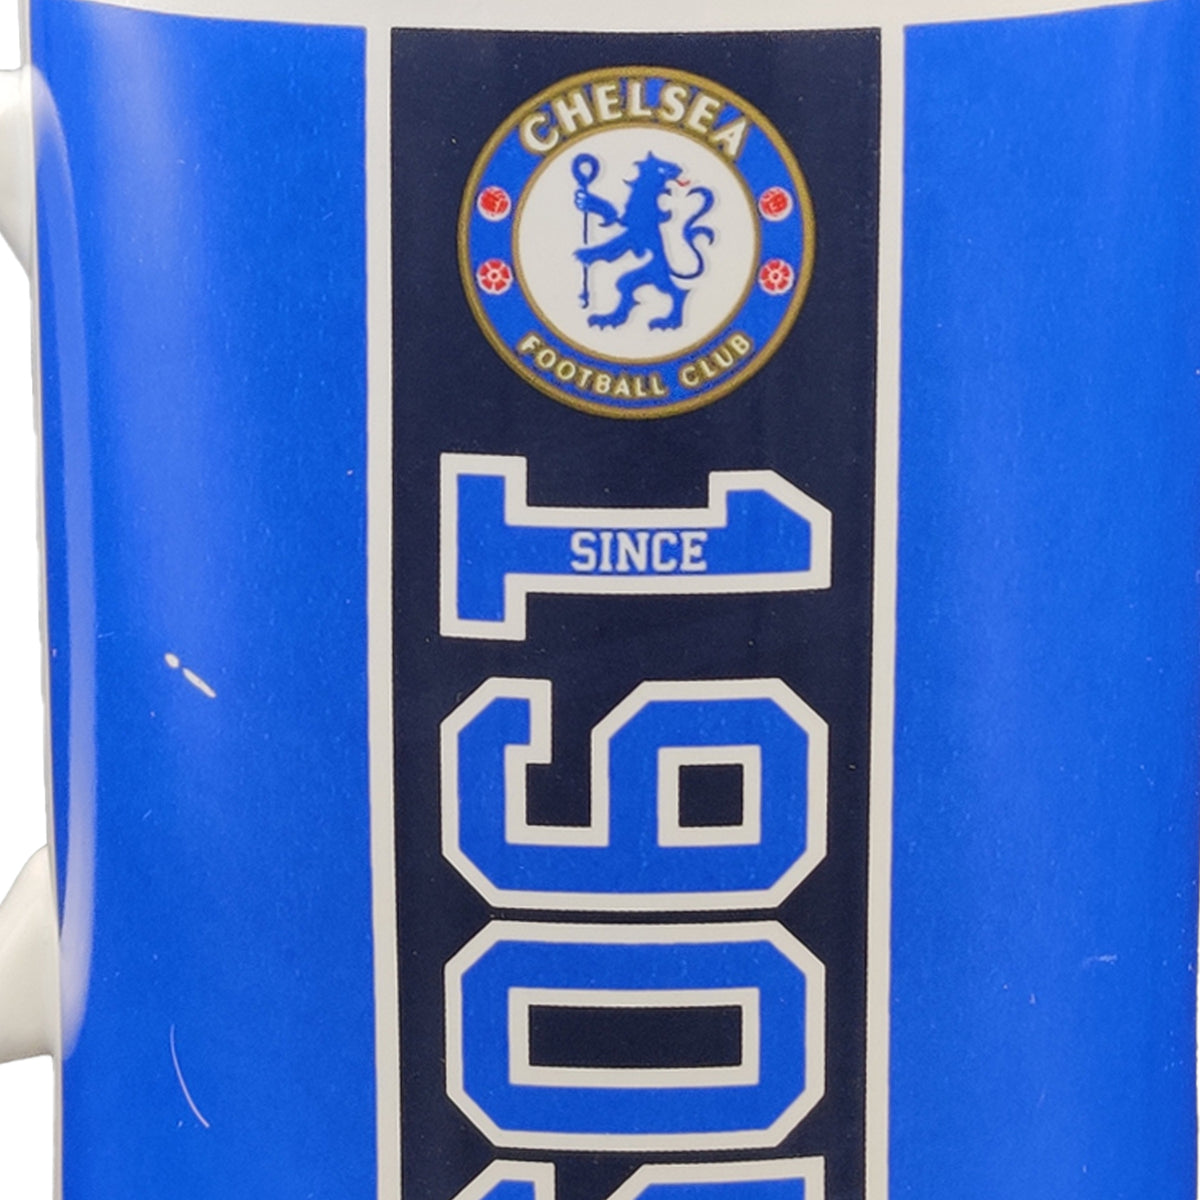 Chelsea FC Since 1905 Mug